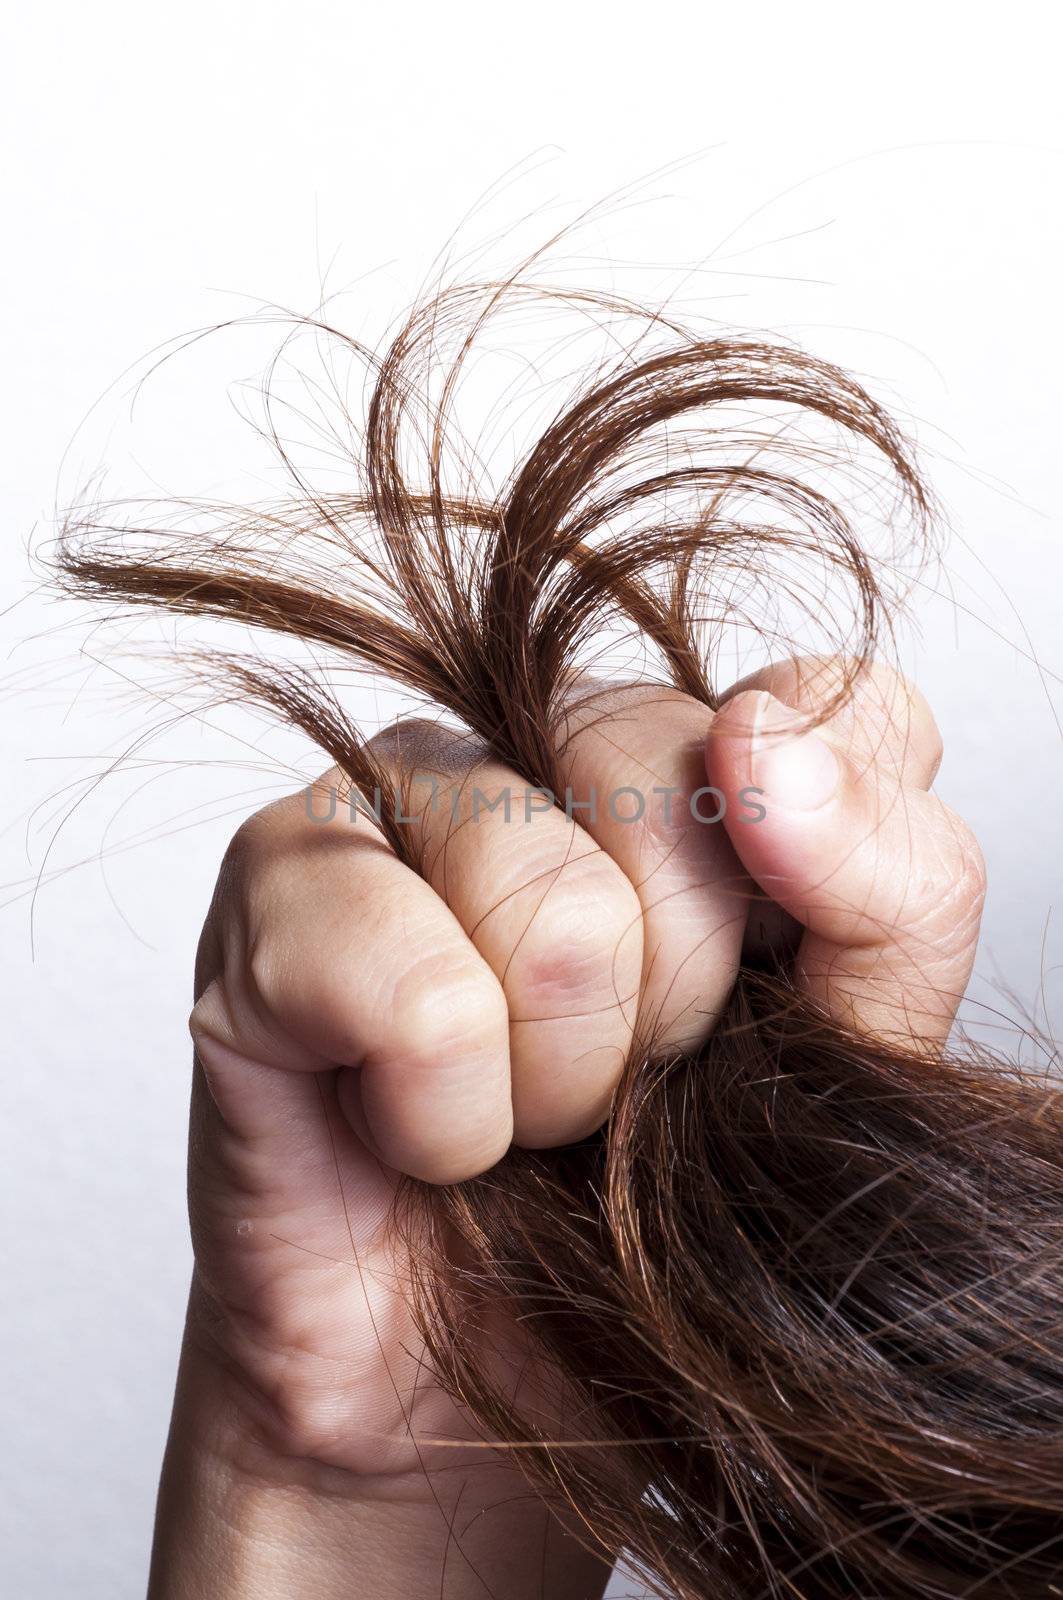 Woman hand grabbed damaged hair